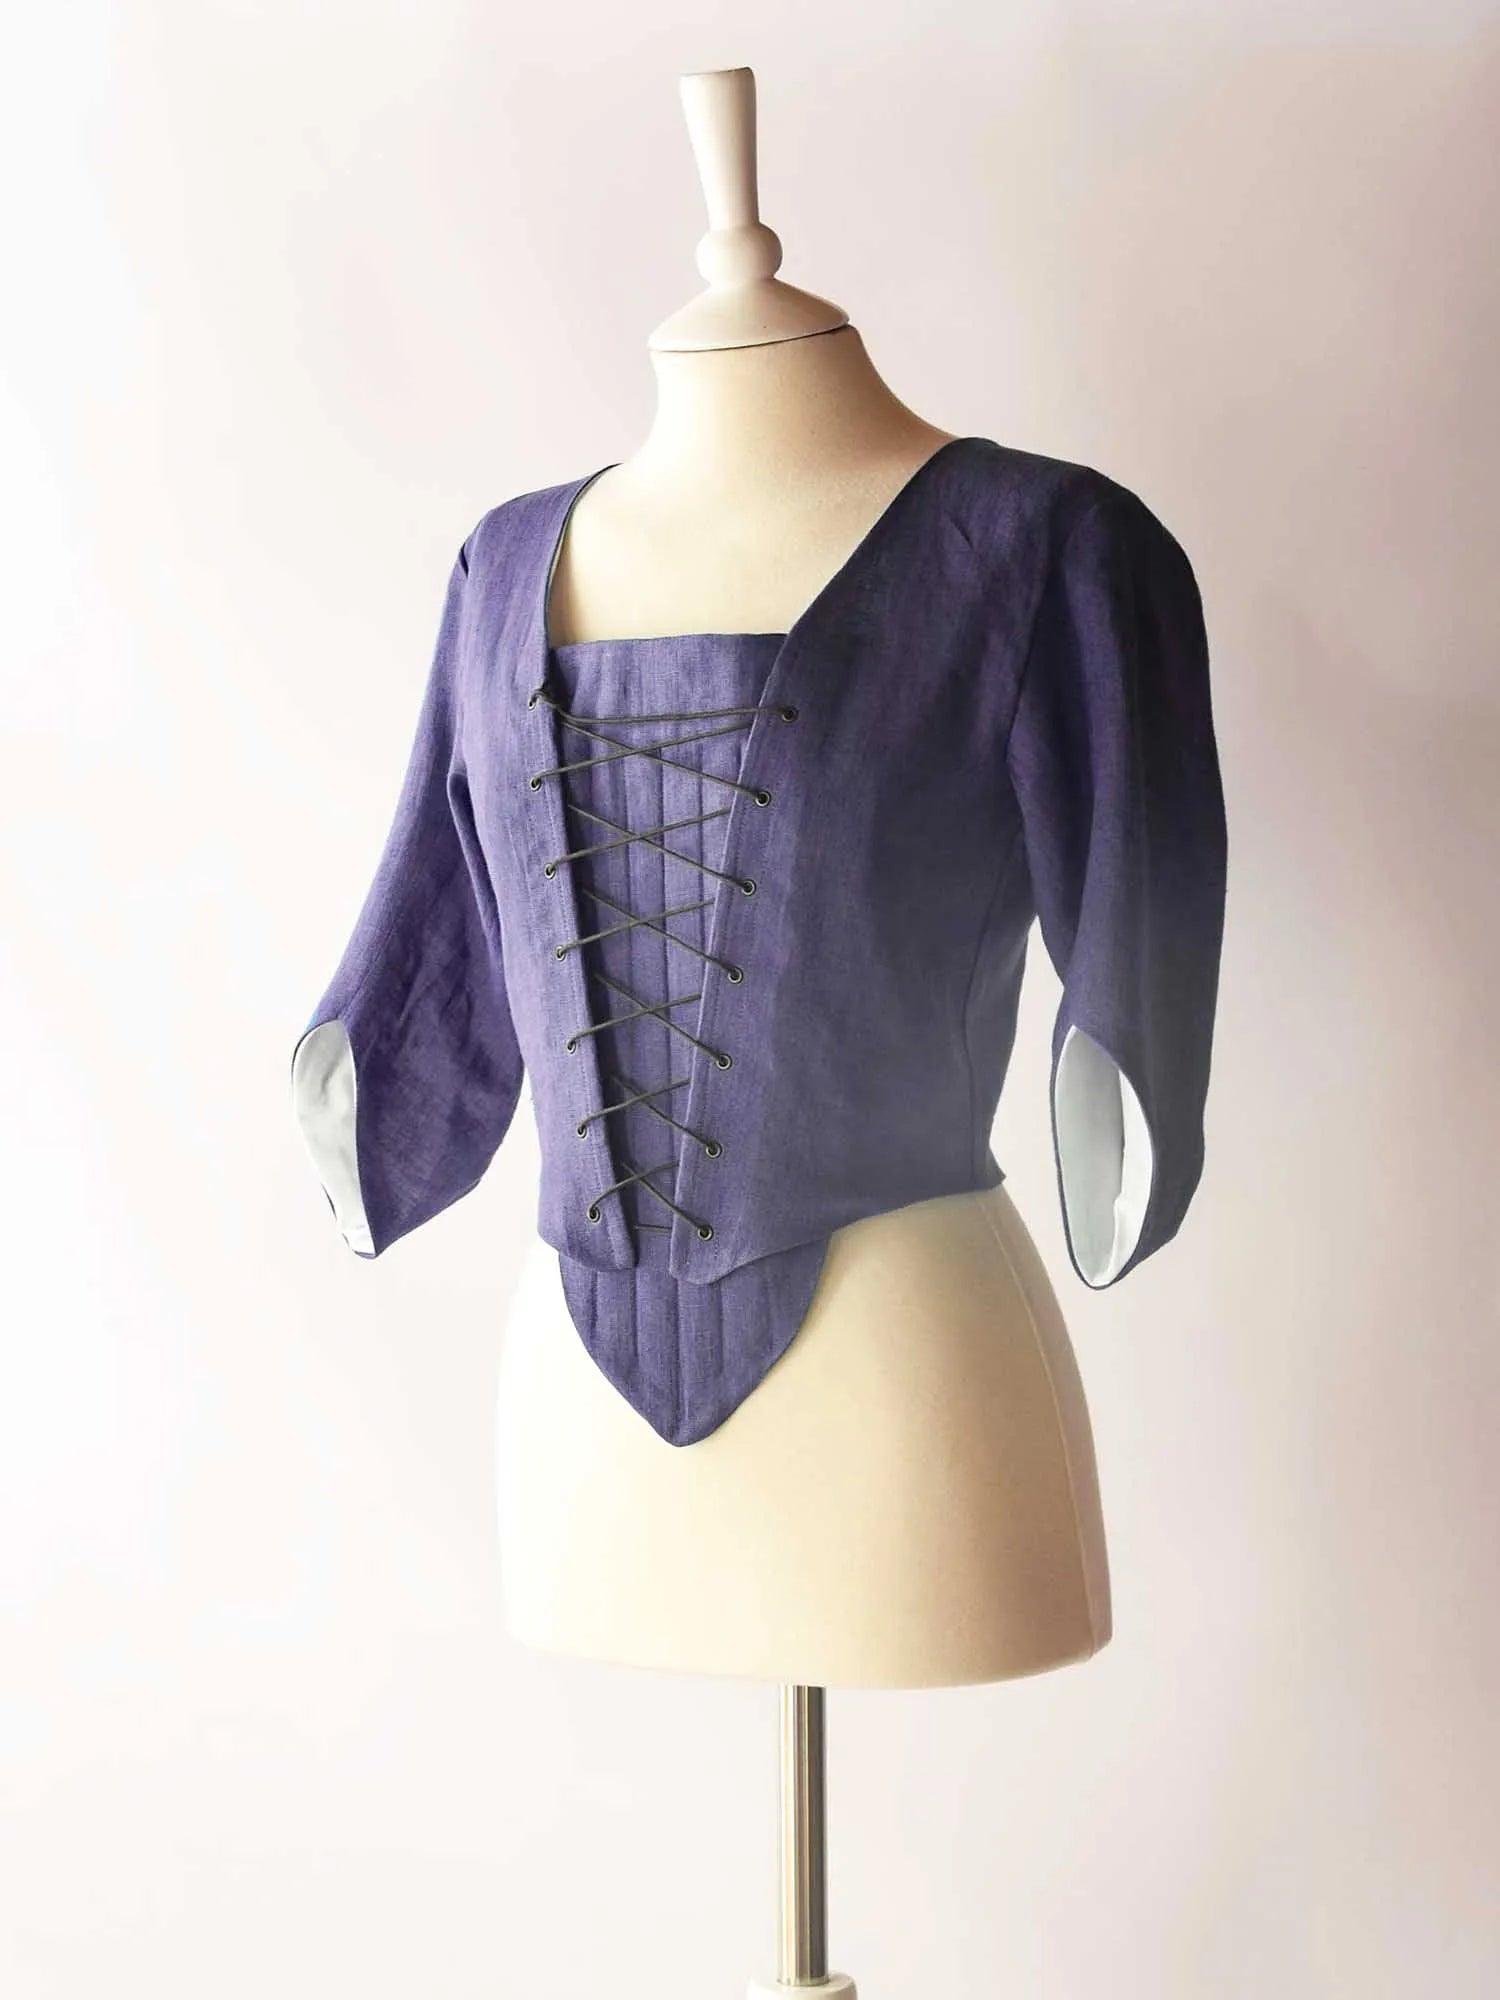 Lace Up Bodice in Plum Purple Linen - Atelier Serraspina